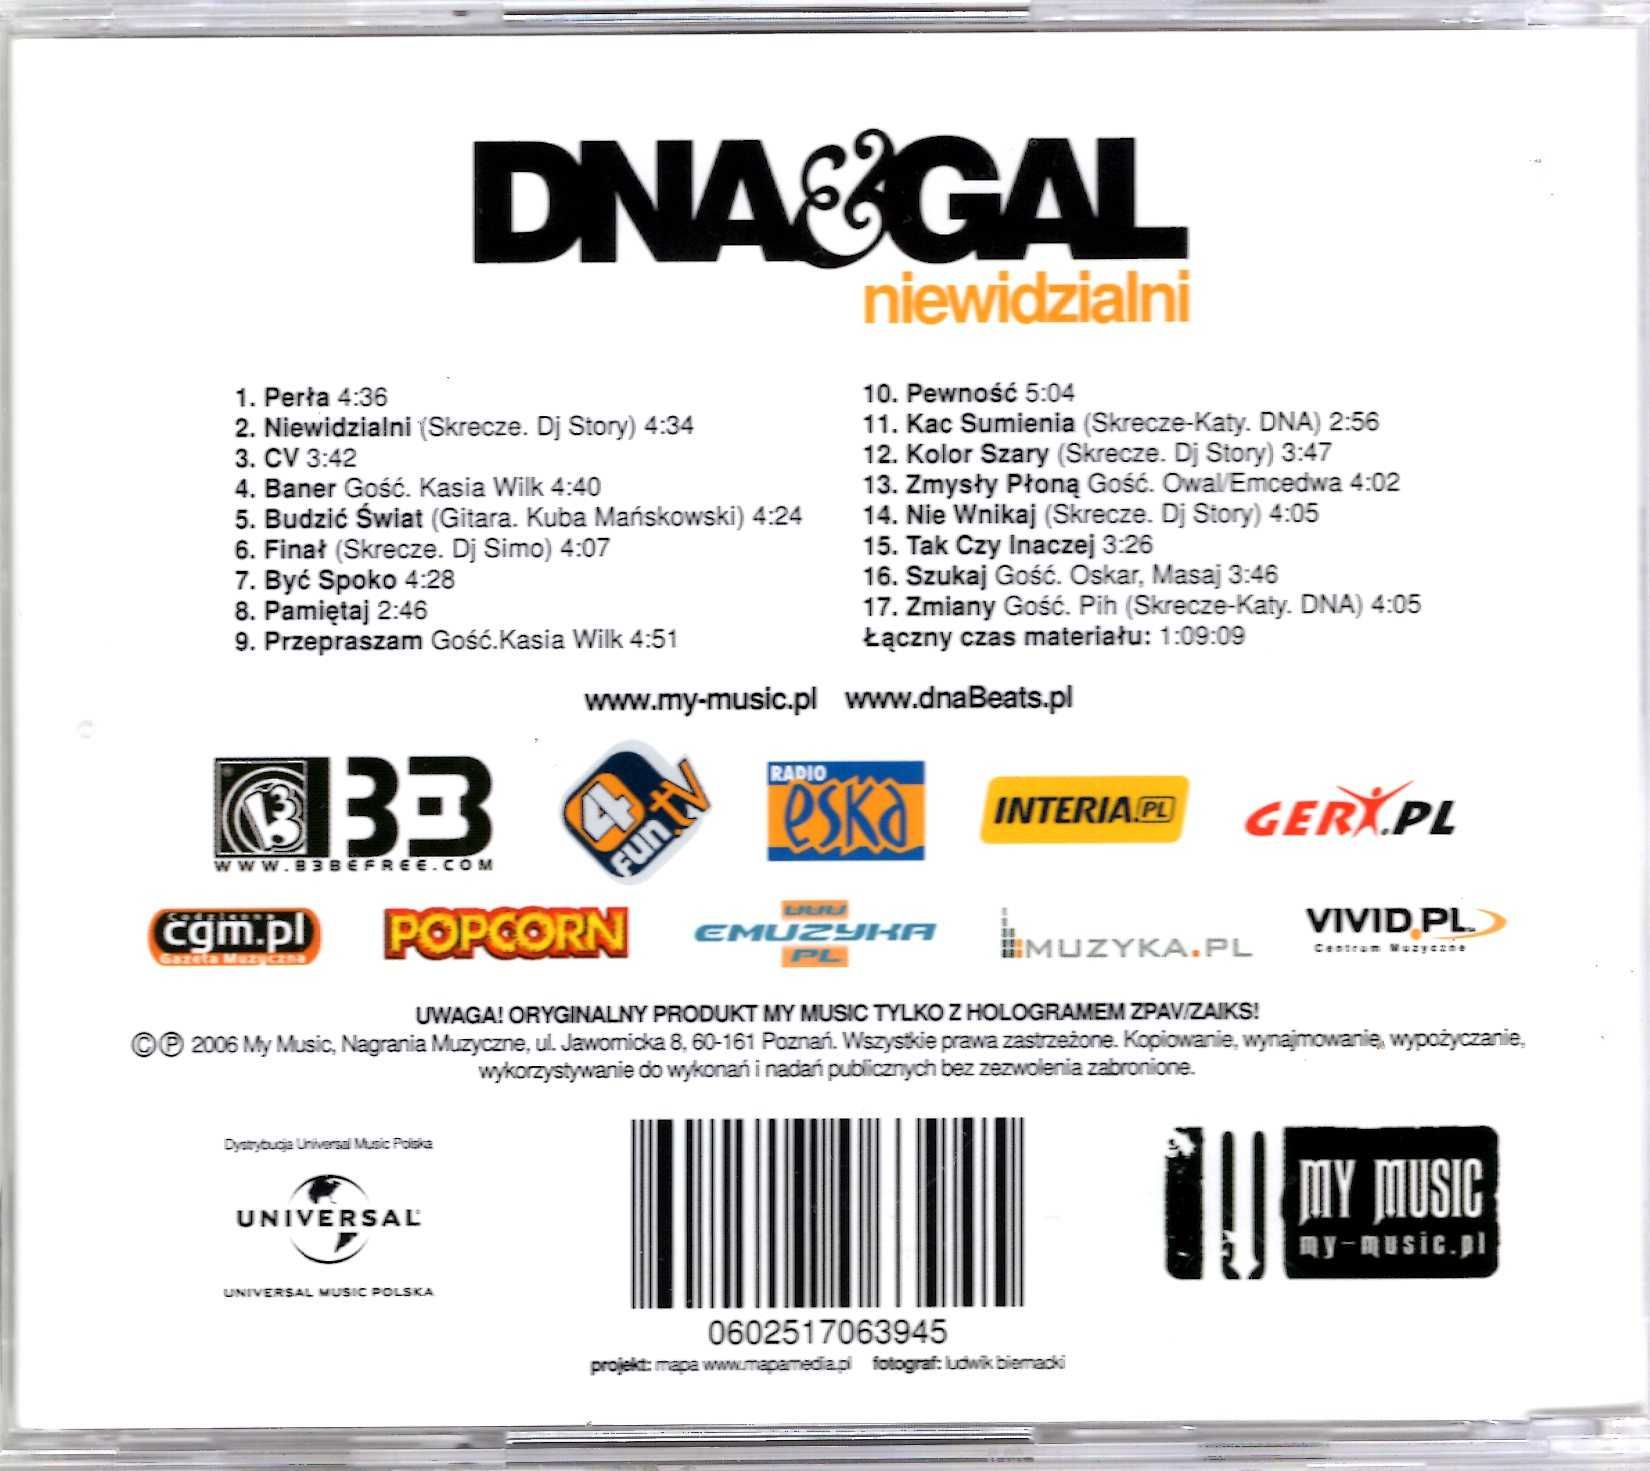 Dna & Gal - Niewidzialni (CD) Owal Pih Kasia Wilk